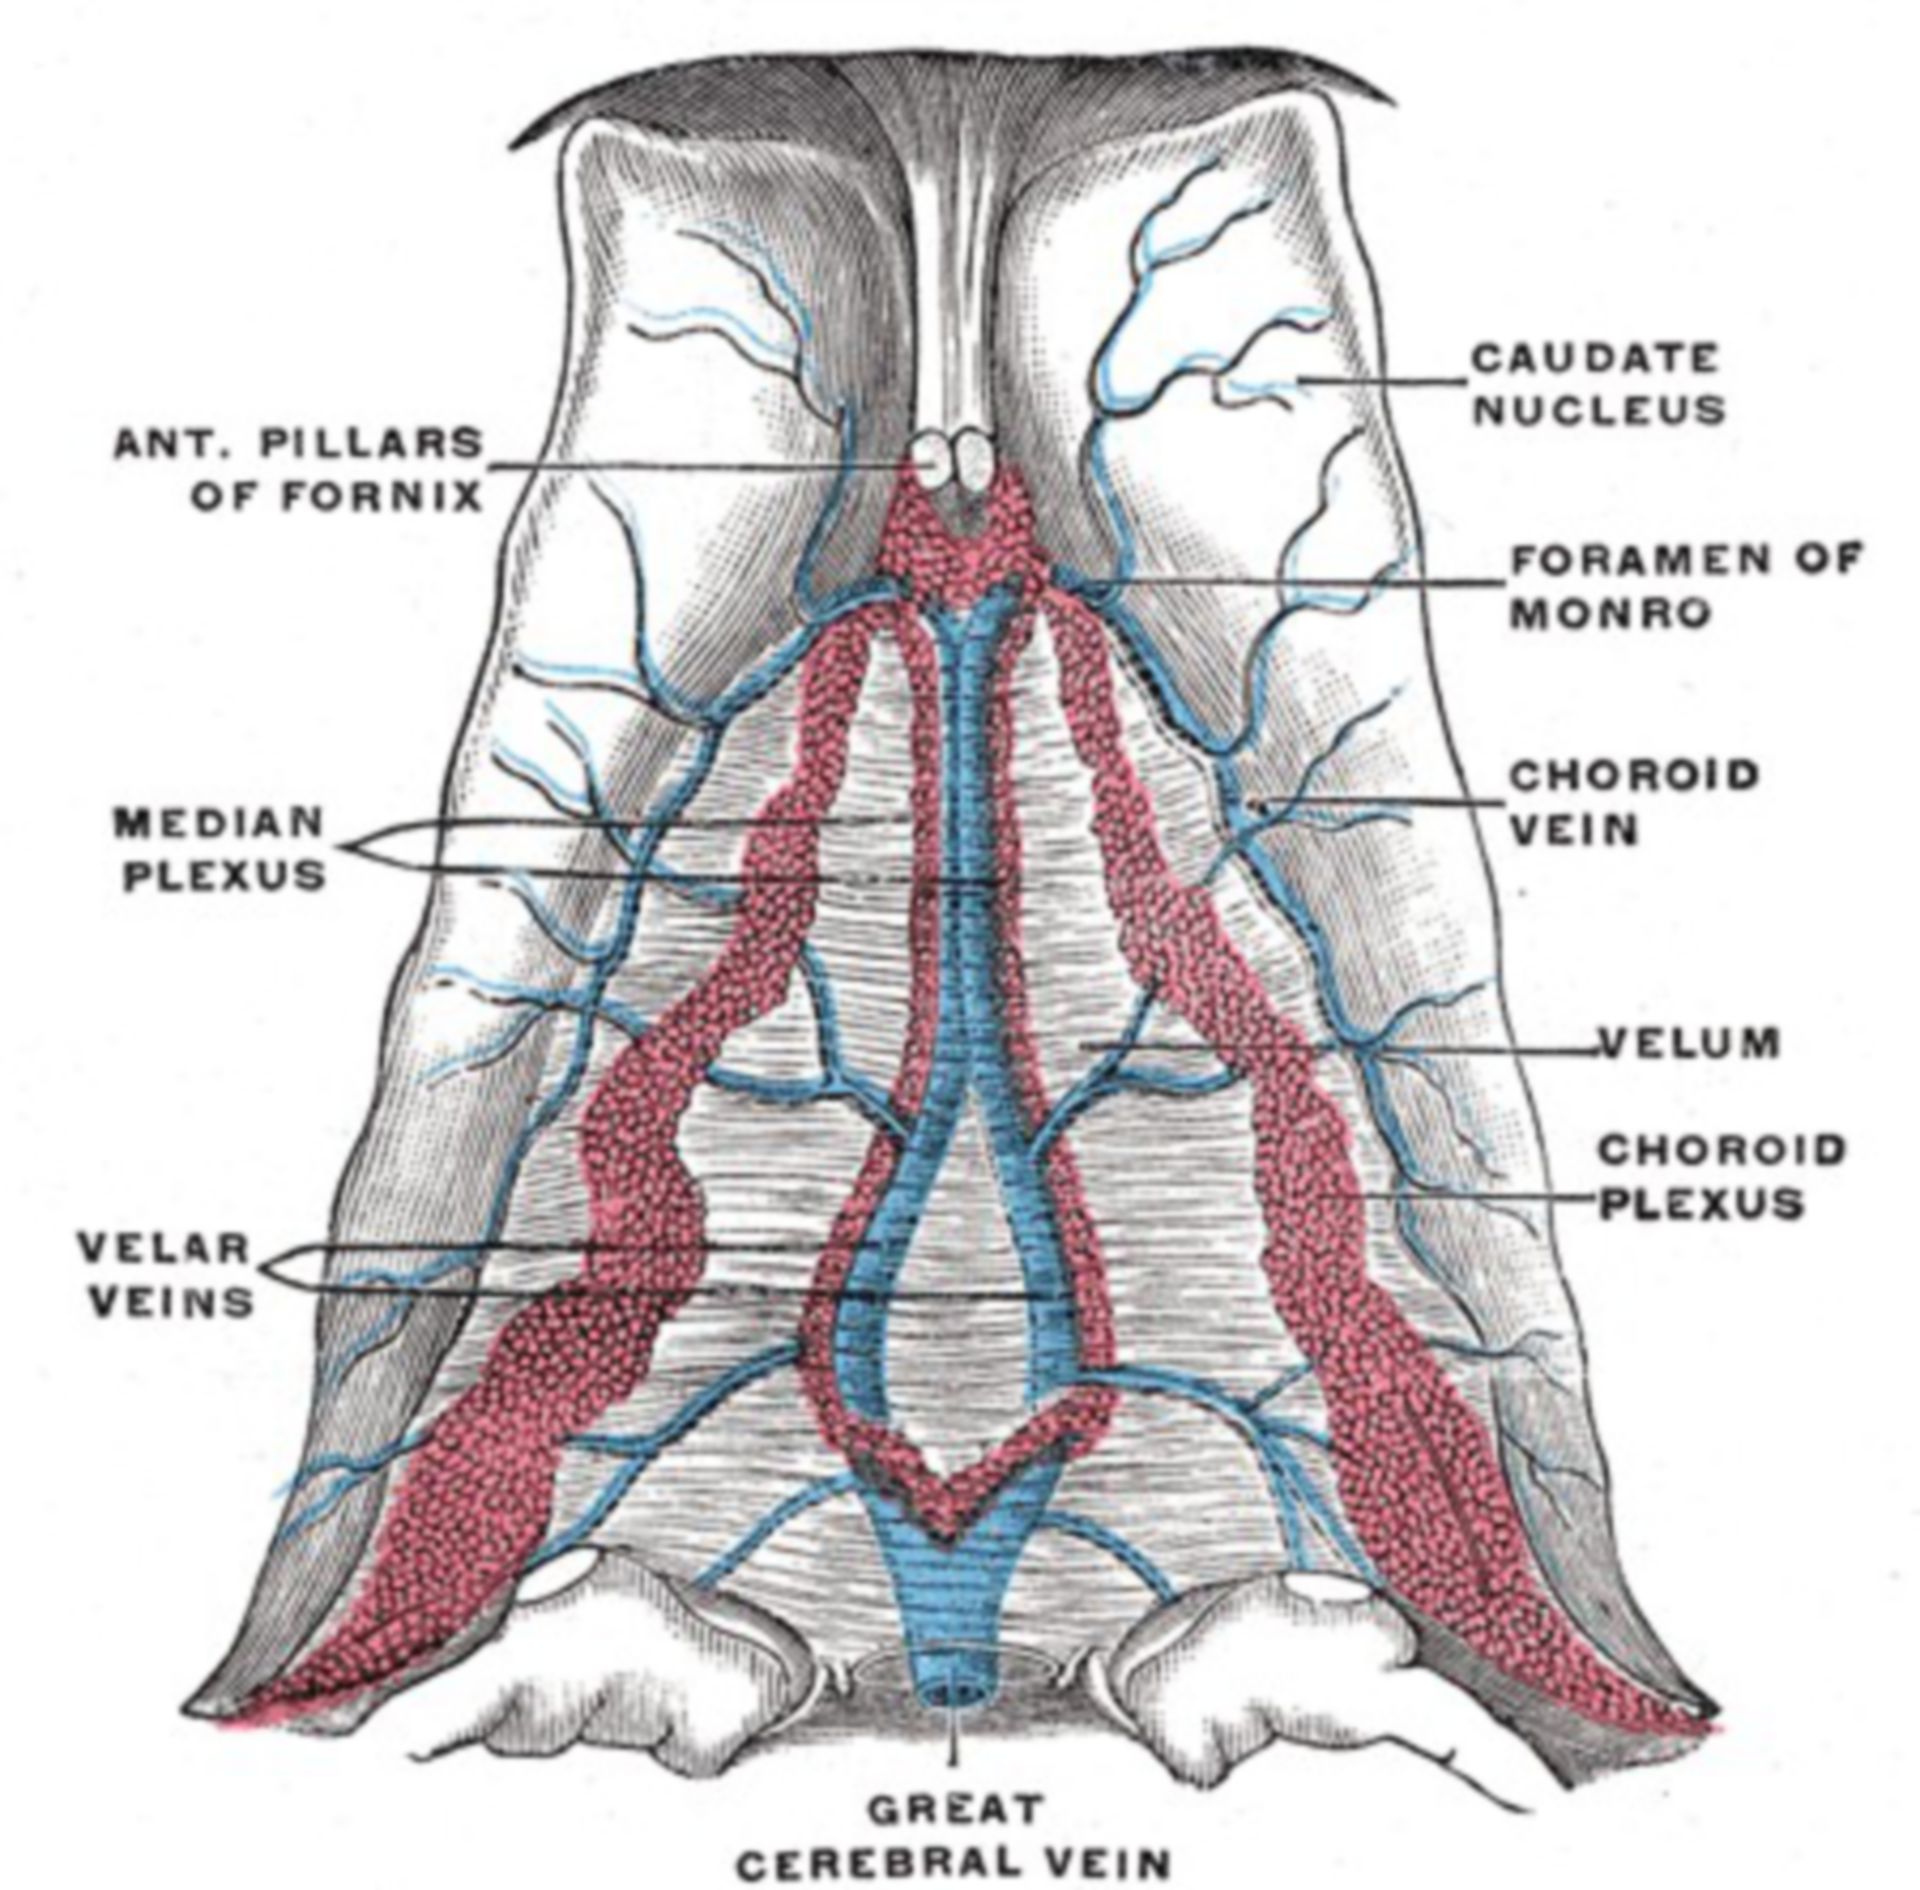 Choroid plexus